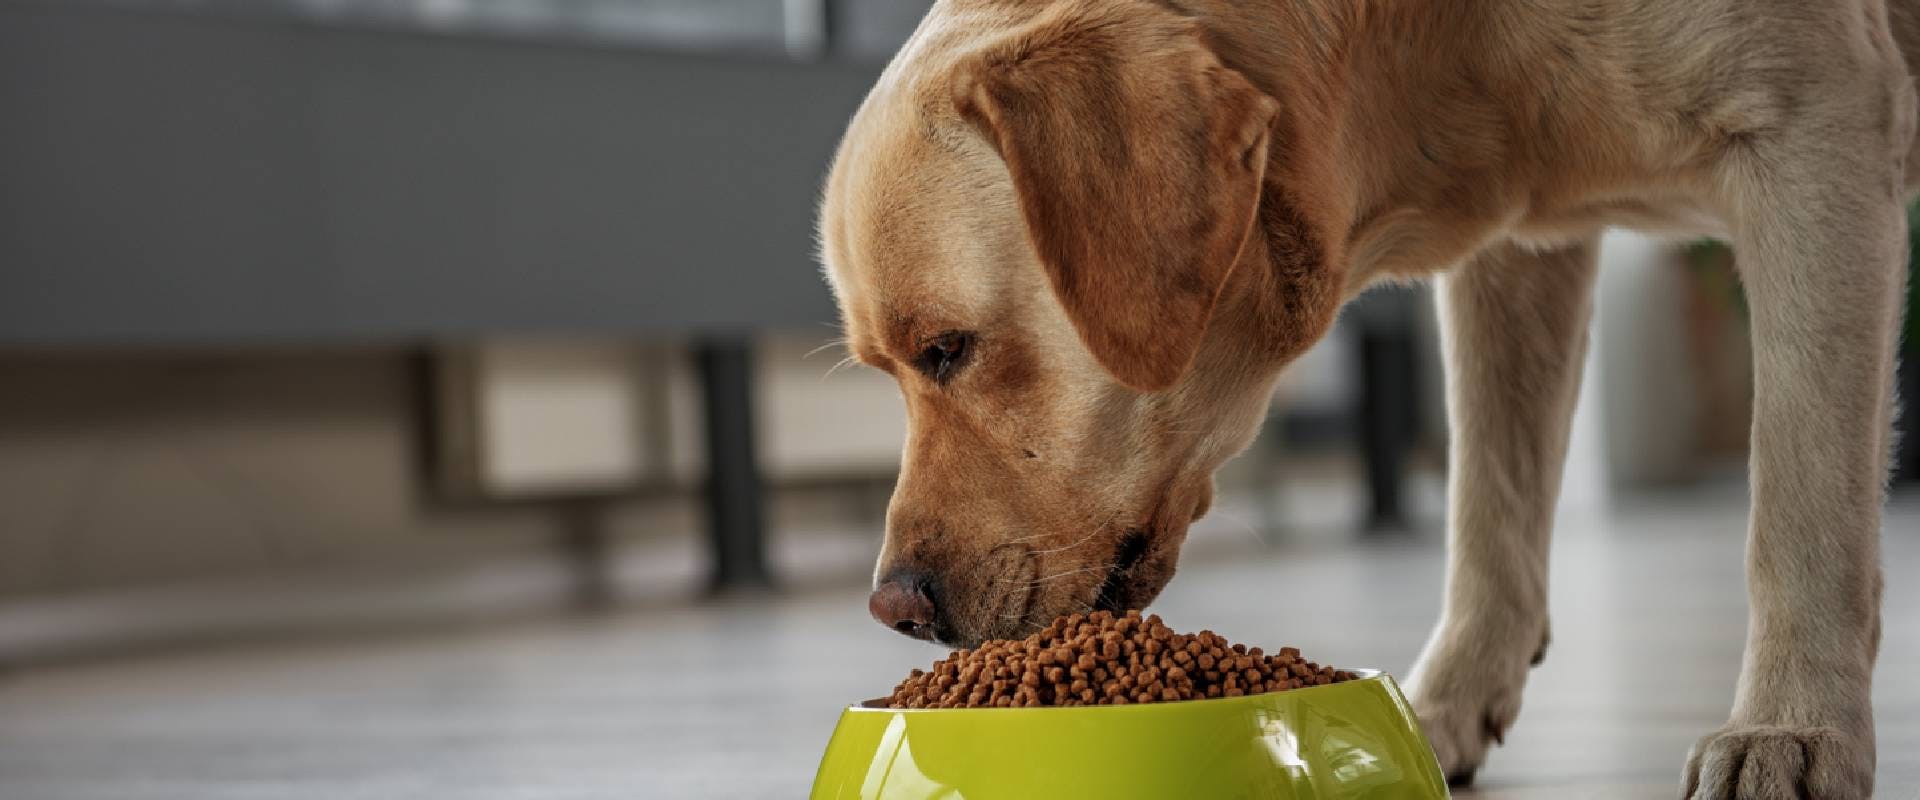 Golden Labrador eating kibble from a dog bowl